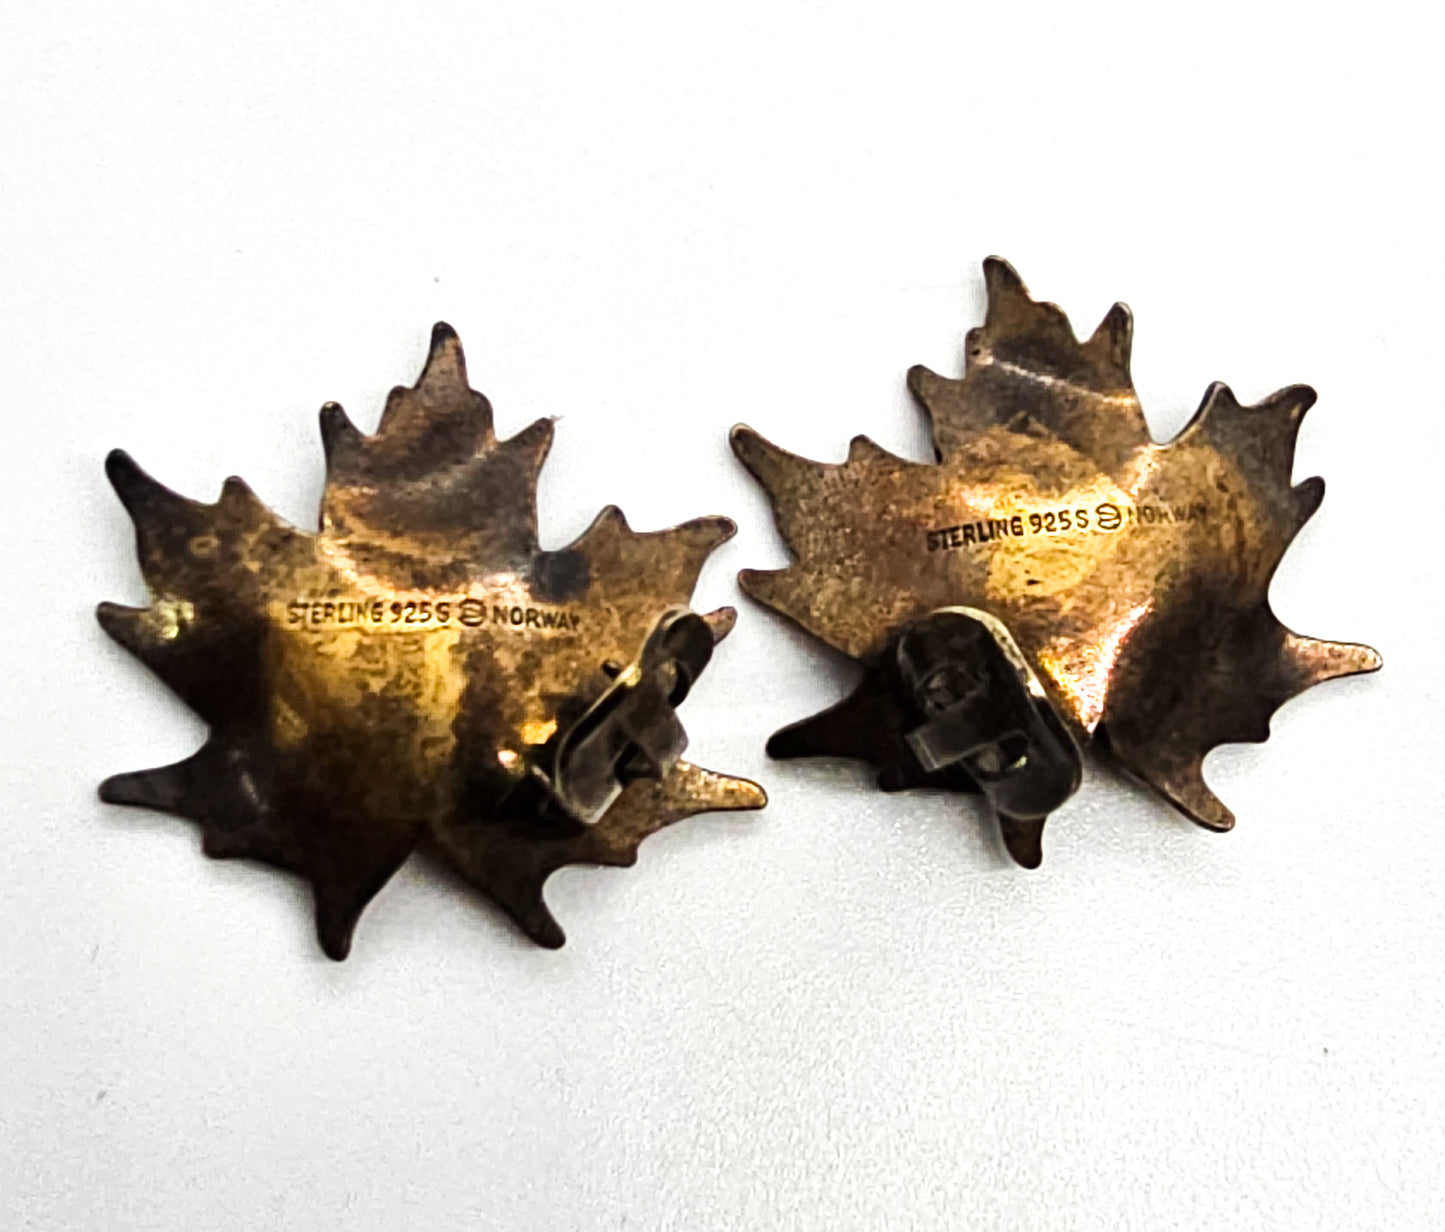 Hroar Prydz Norway enamel sterling silver maple leaf vintage clip on earrings